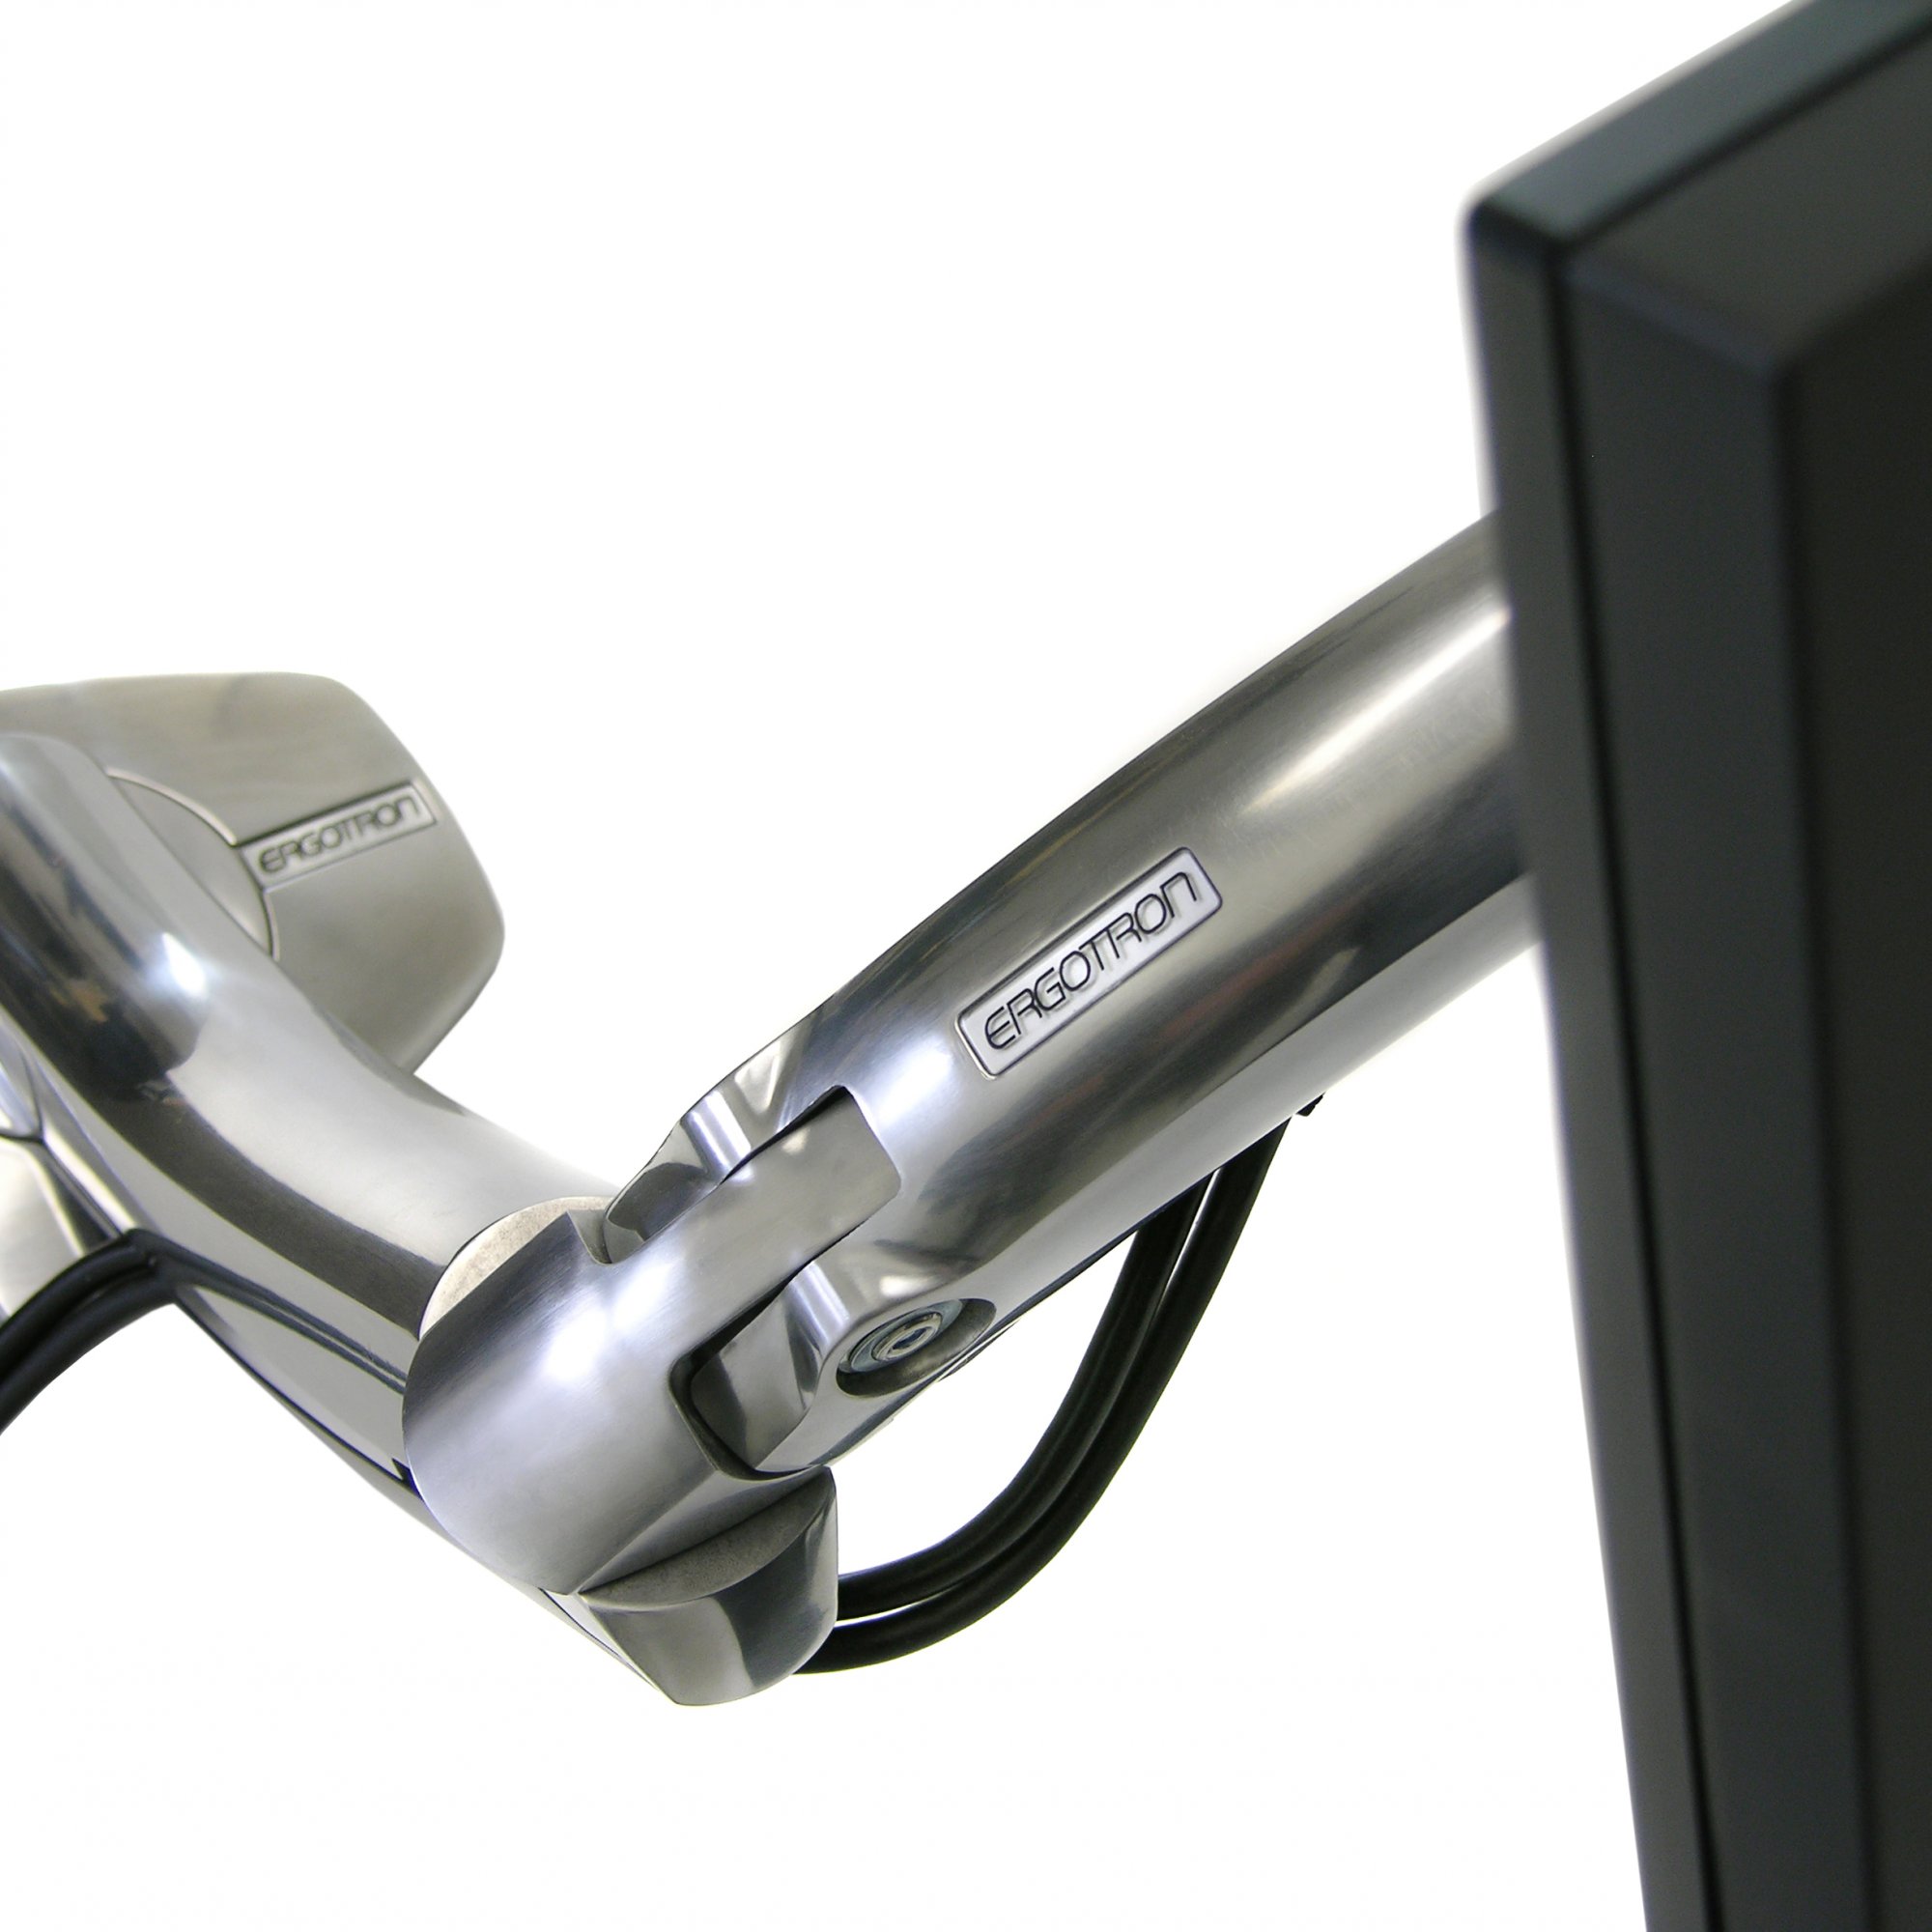 Ergotron 45-214-026 MX Desk Mount Monitor Arm